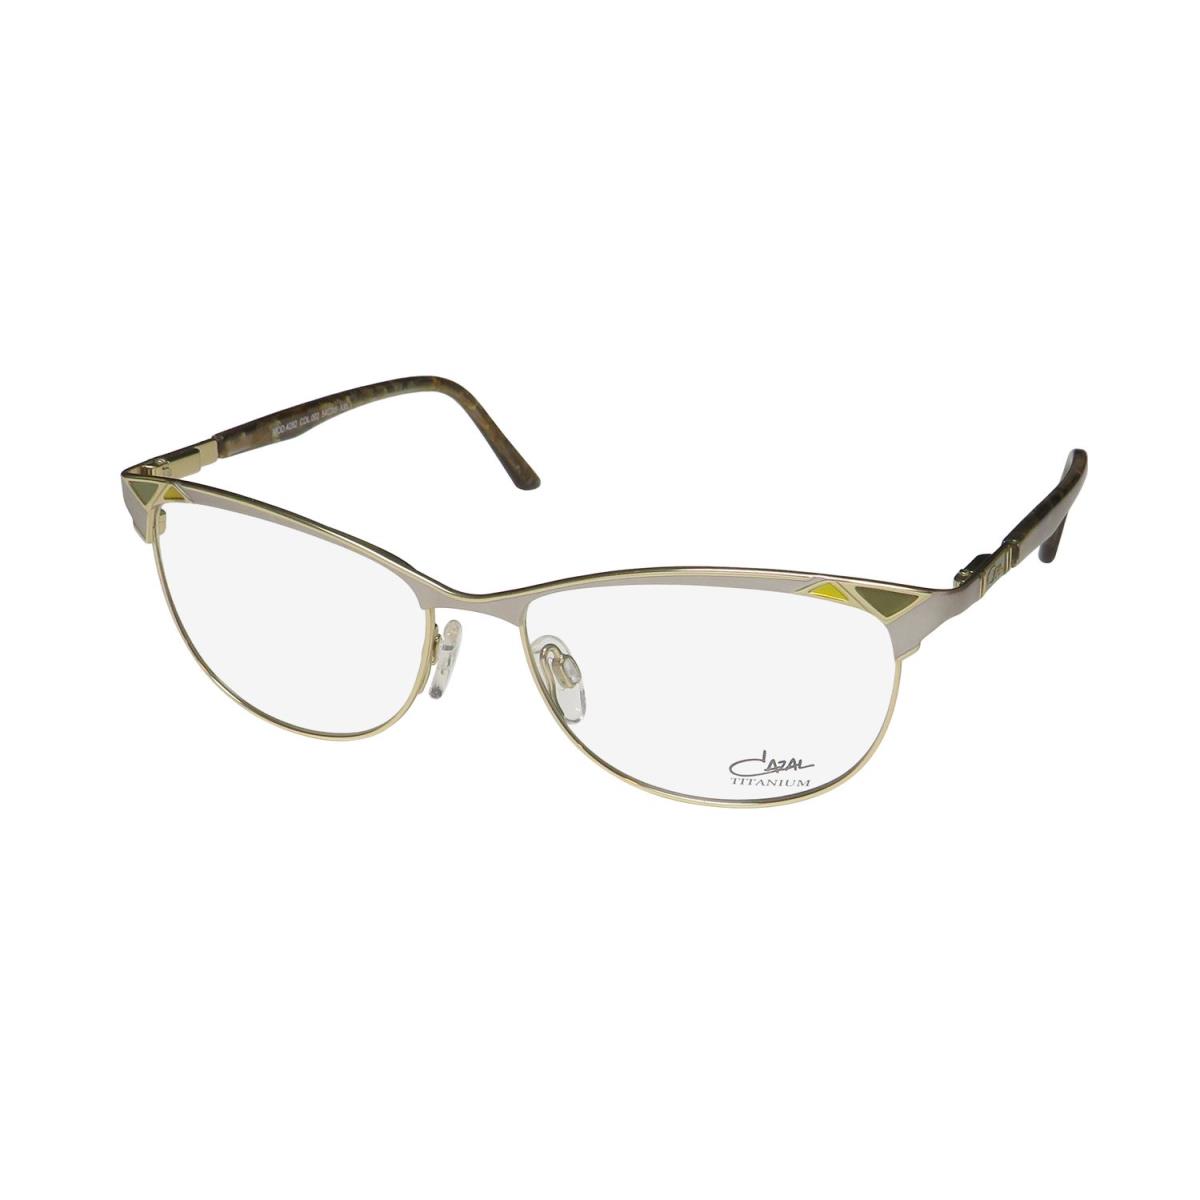 Cazal 4282 Titanium Metal Made IN Germany Modern Eyeglass Frame/glasses Gold / Amber